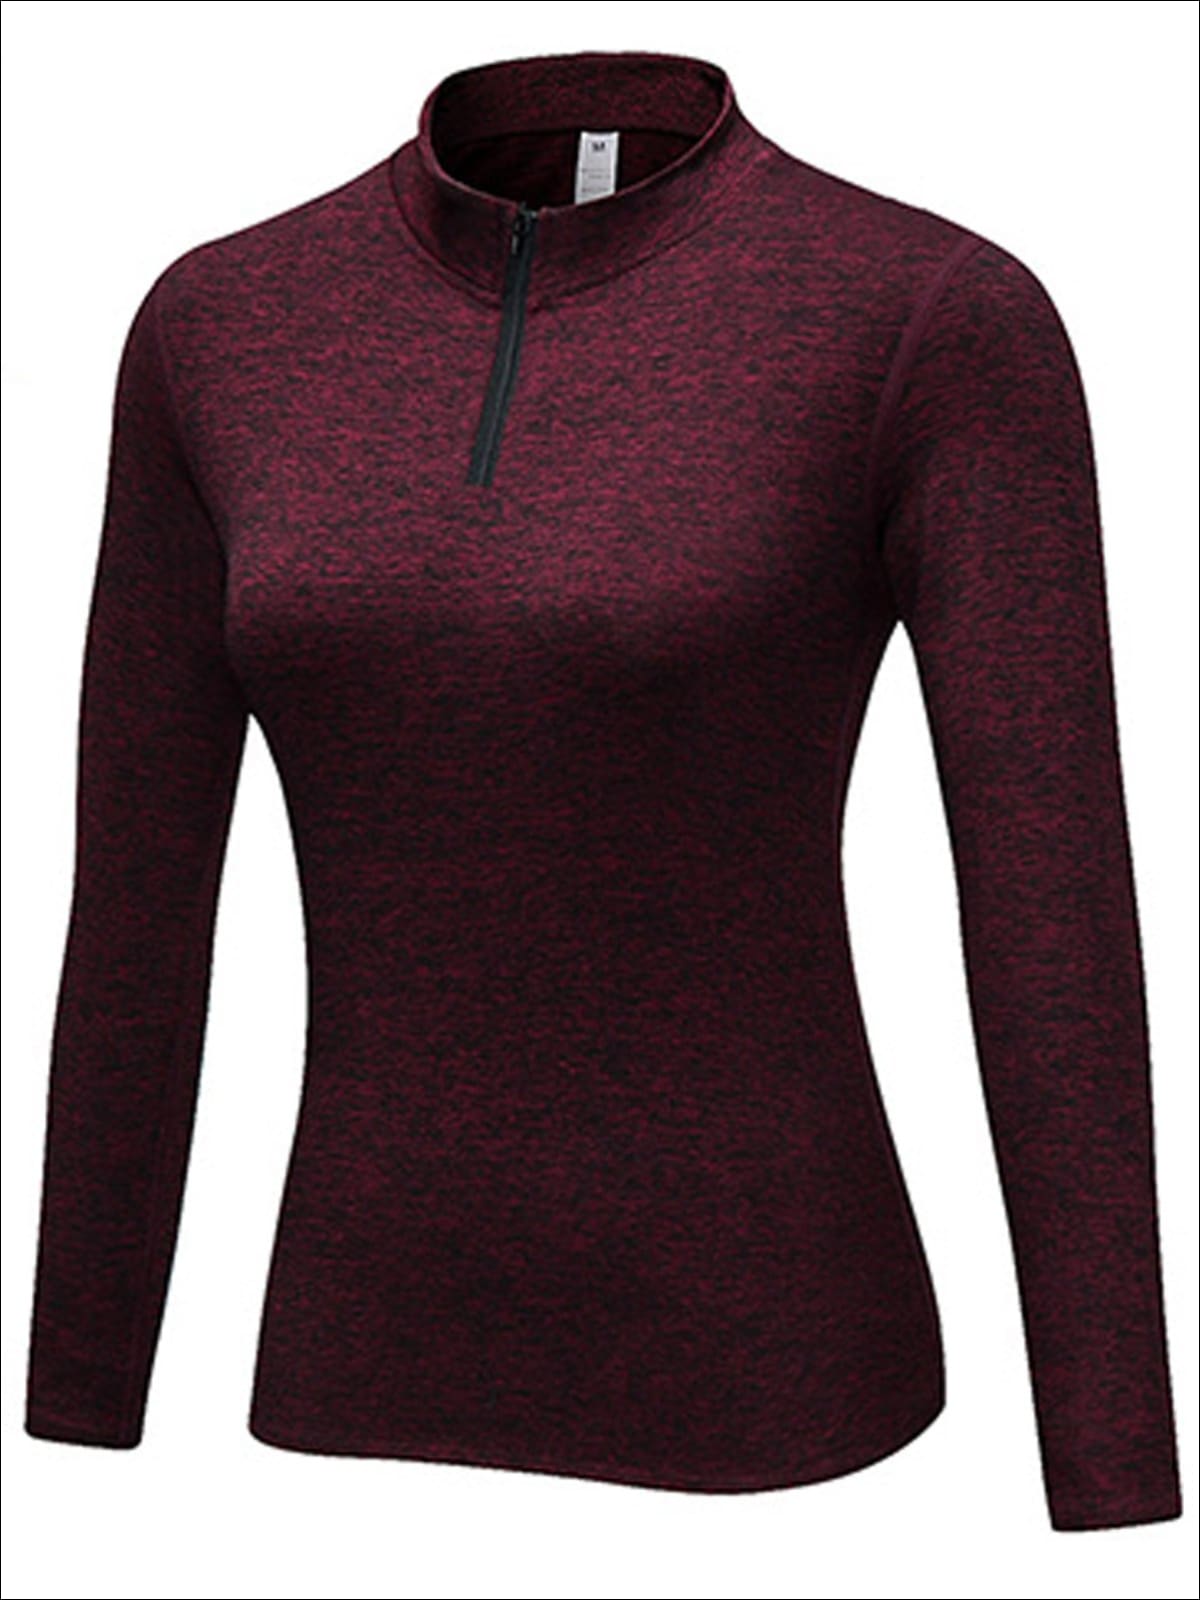 Womens Marled Zip Up Jacket - Burgundy / S - Womens Activewear